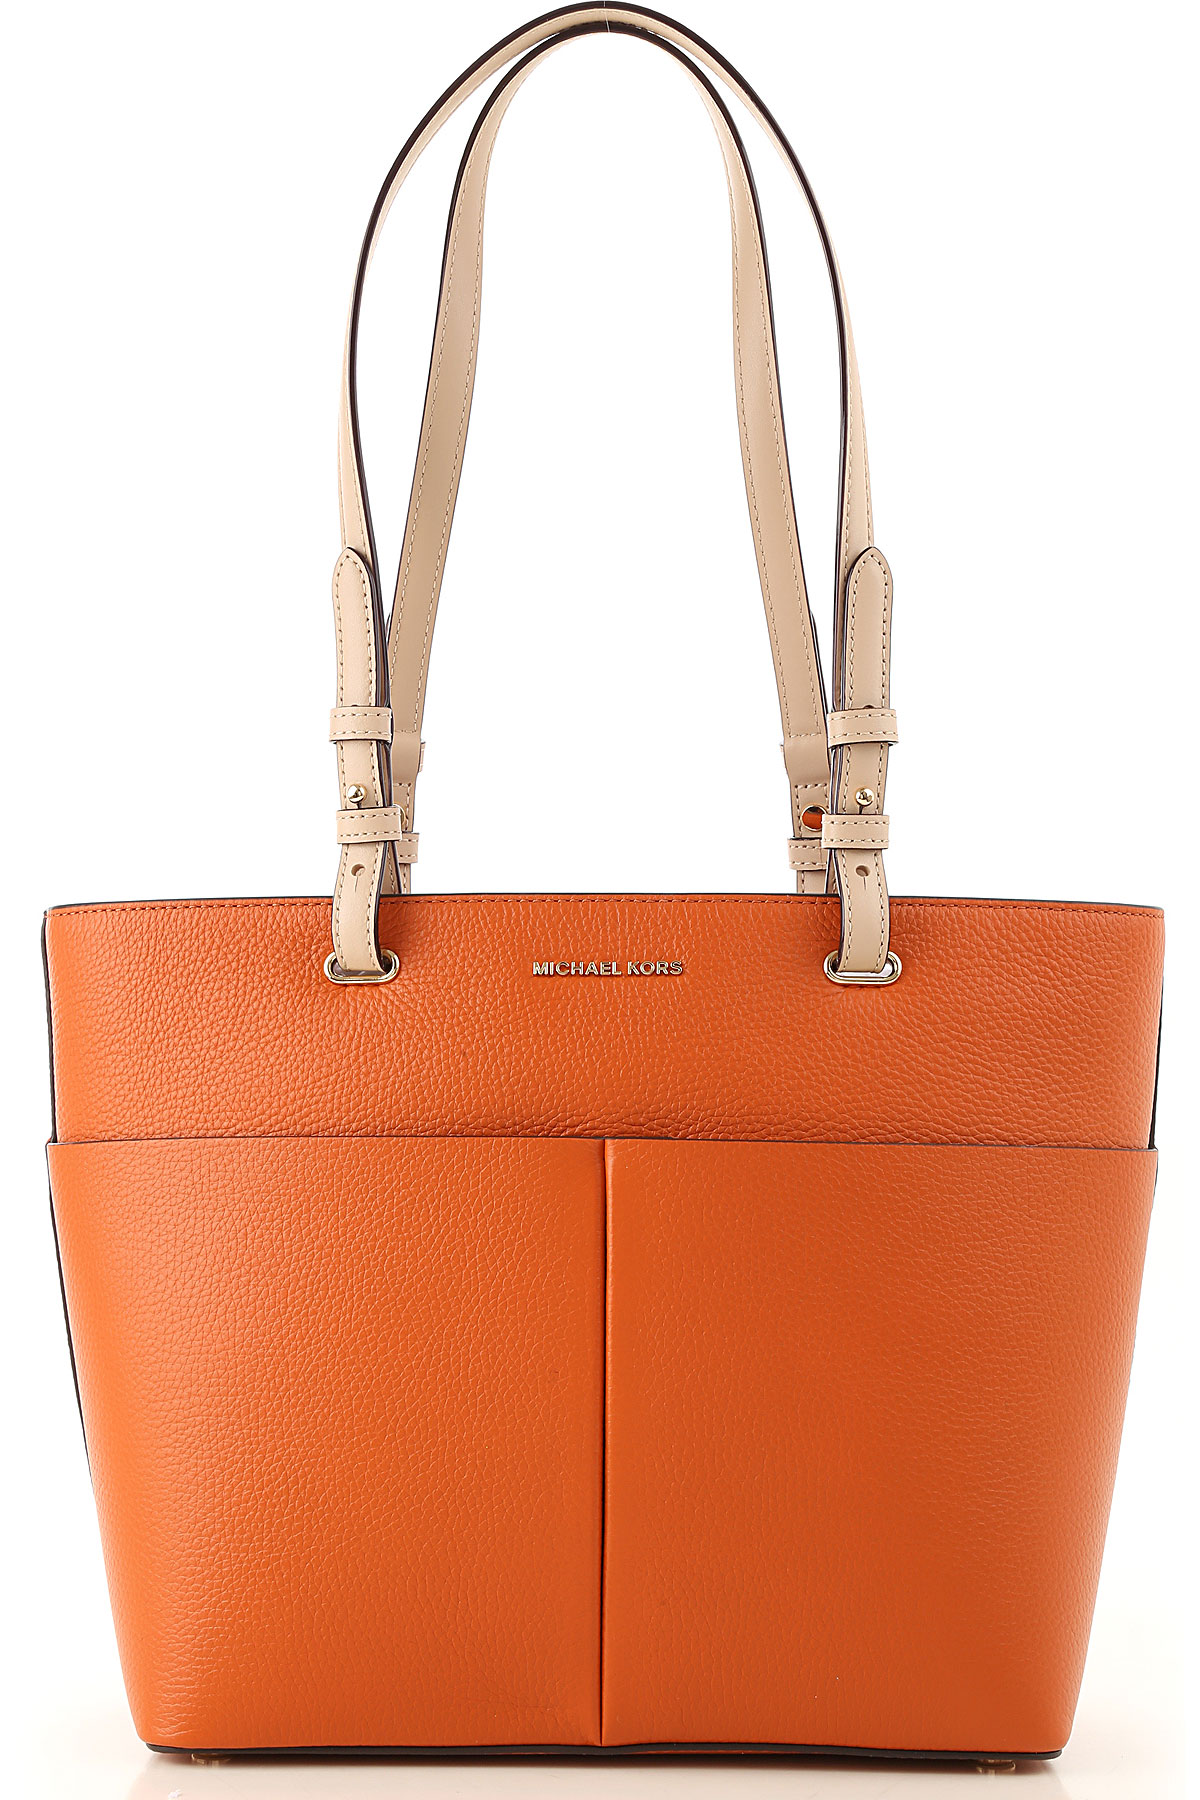 Handbags Michael Kors, Style code: 30s9gbft2l-812-